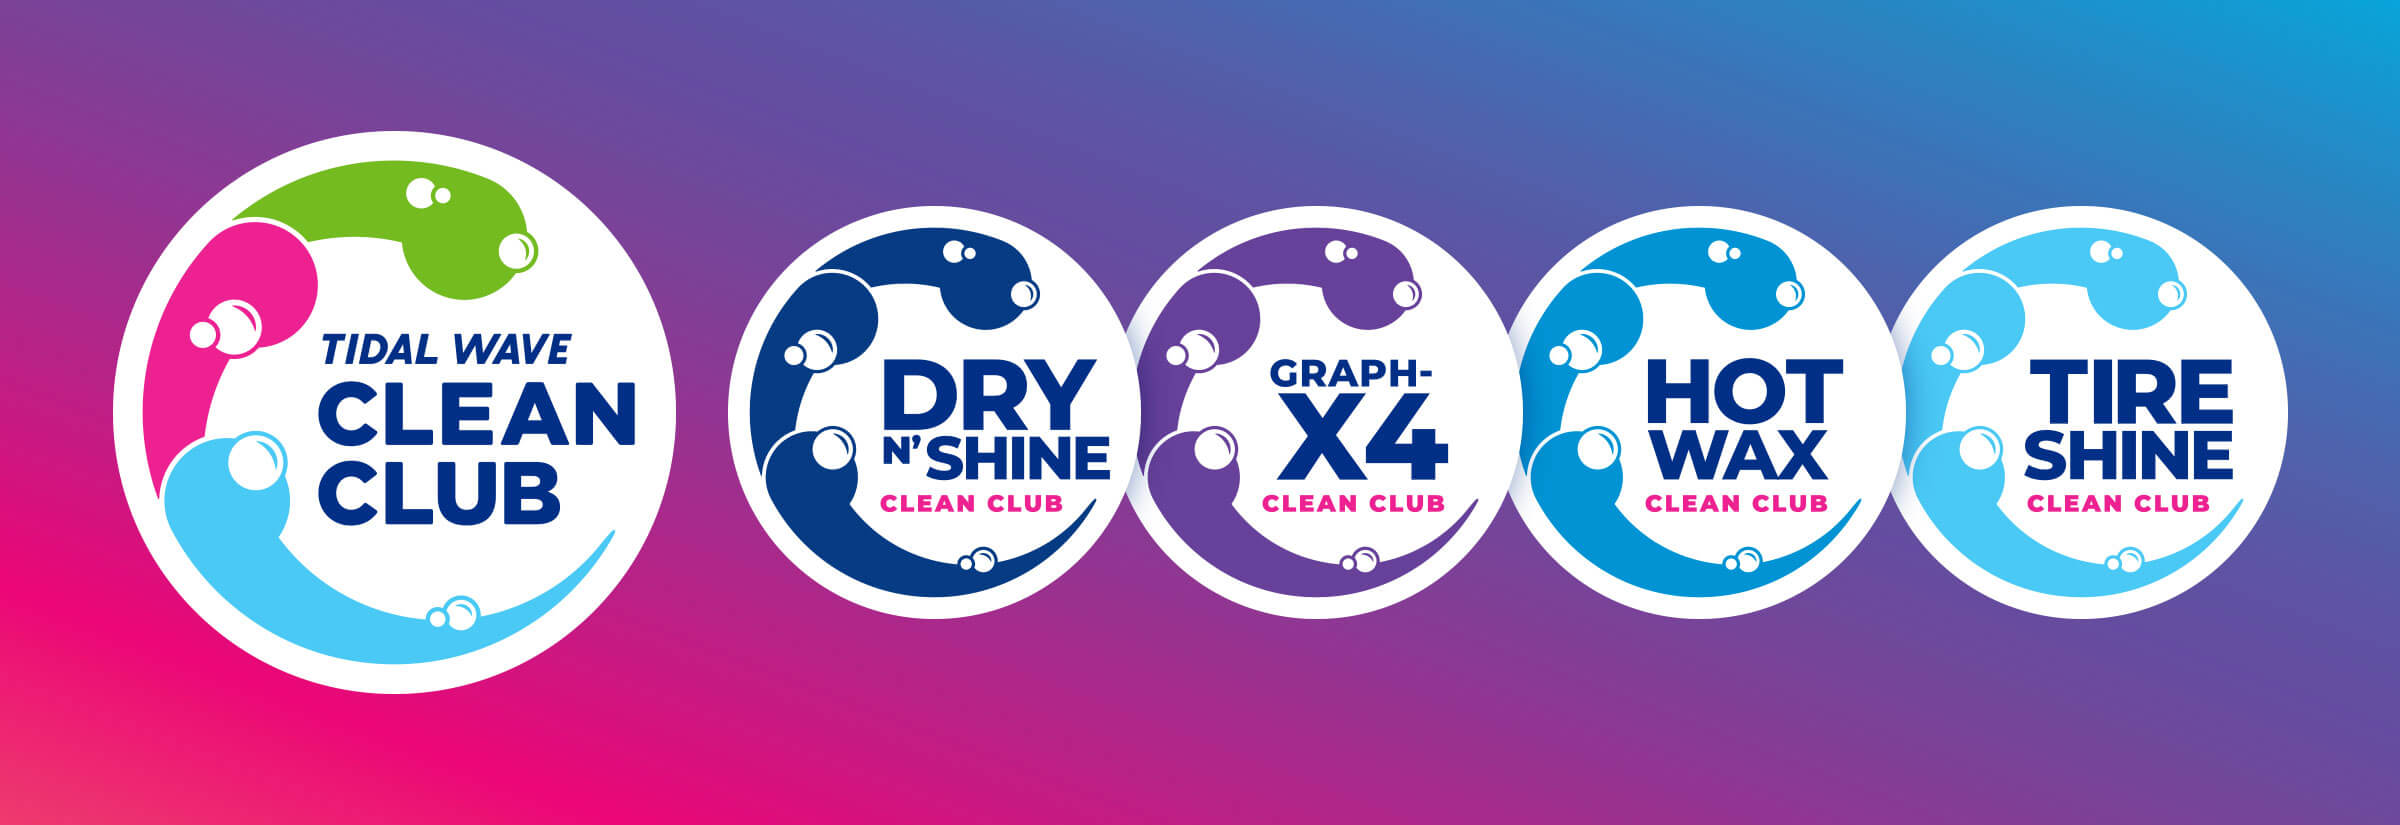 Tidal Wave Clean Club Logos